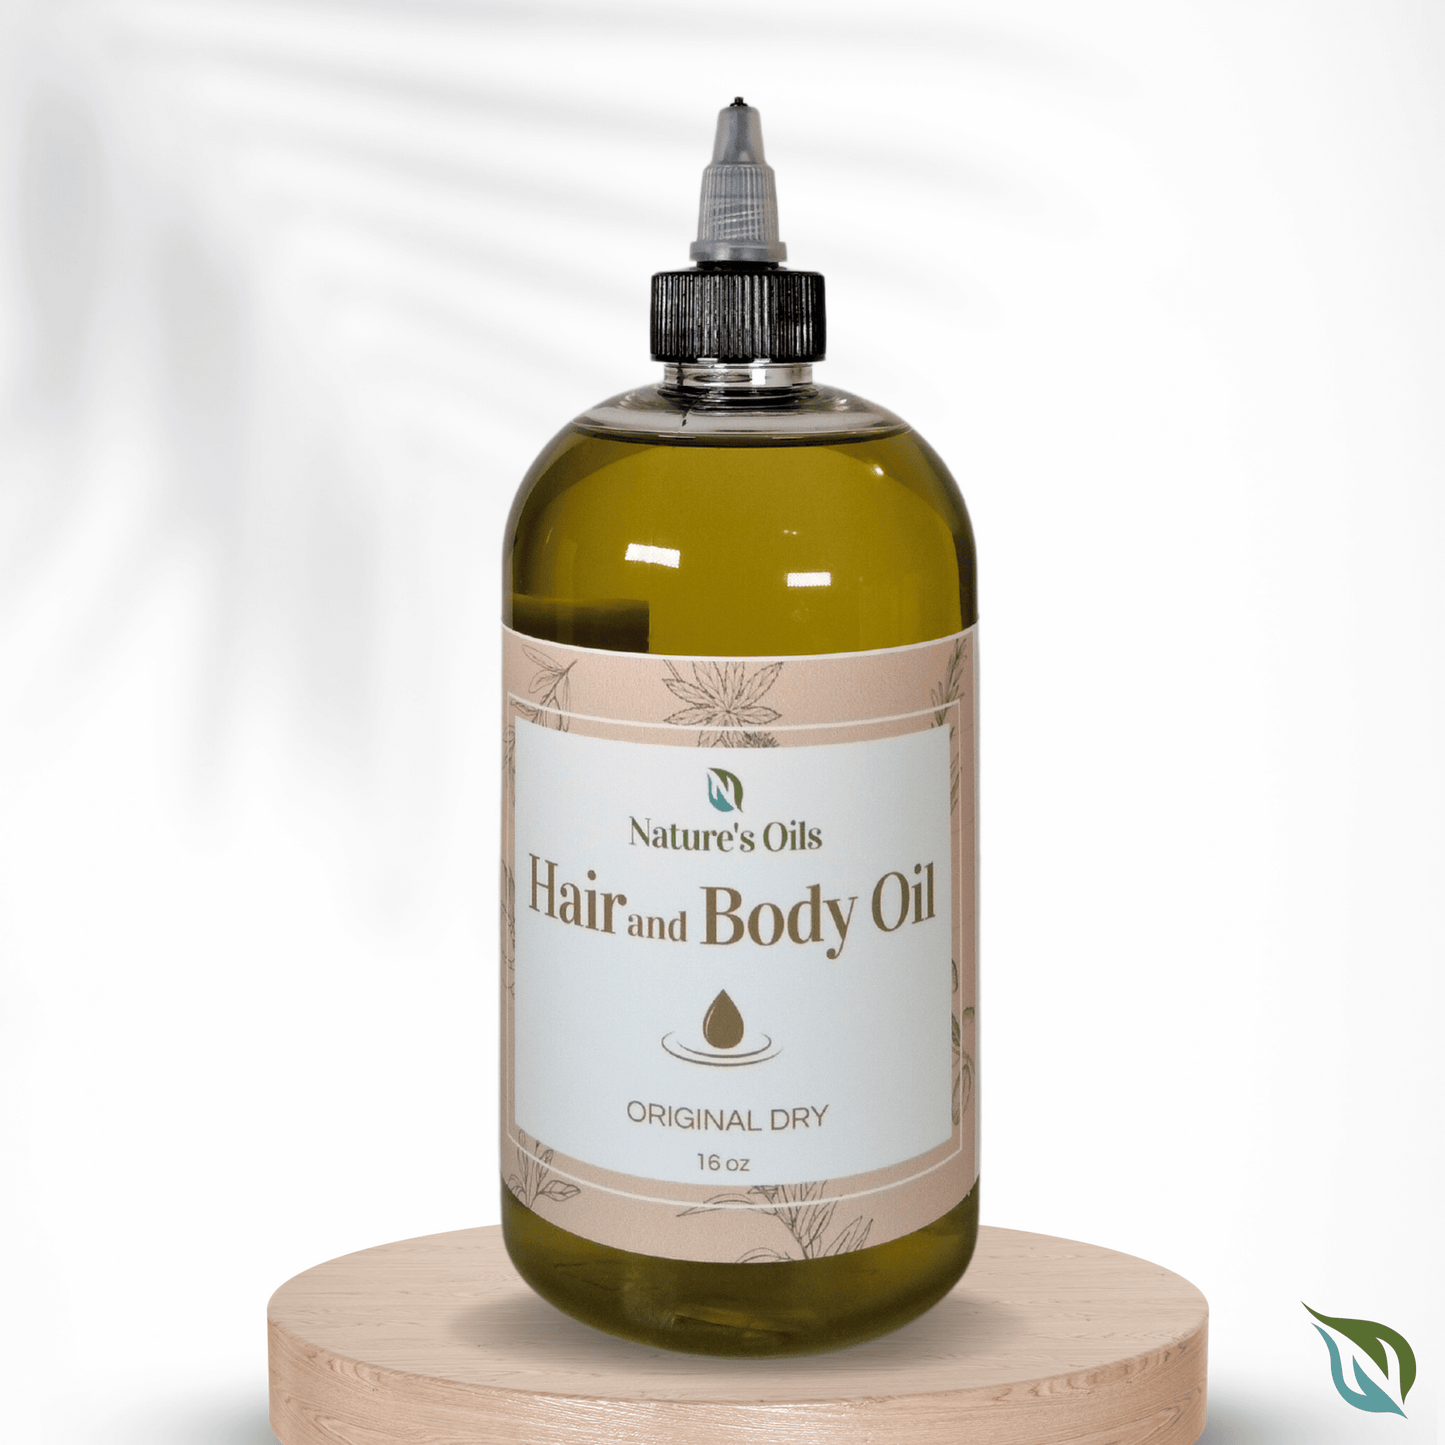 Nature's Oils Hair and Body Oil Original Dry 16 oz